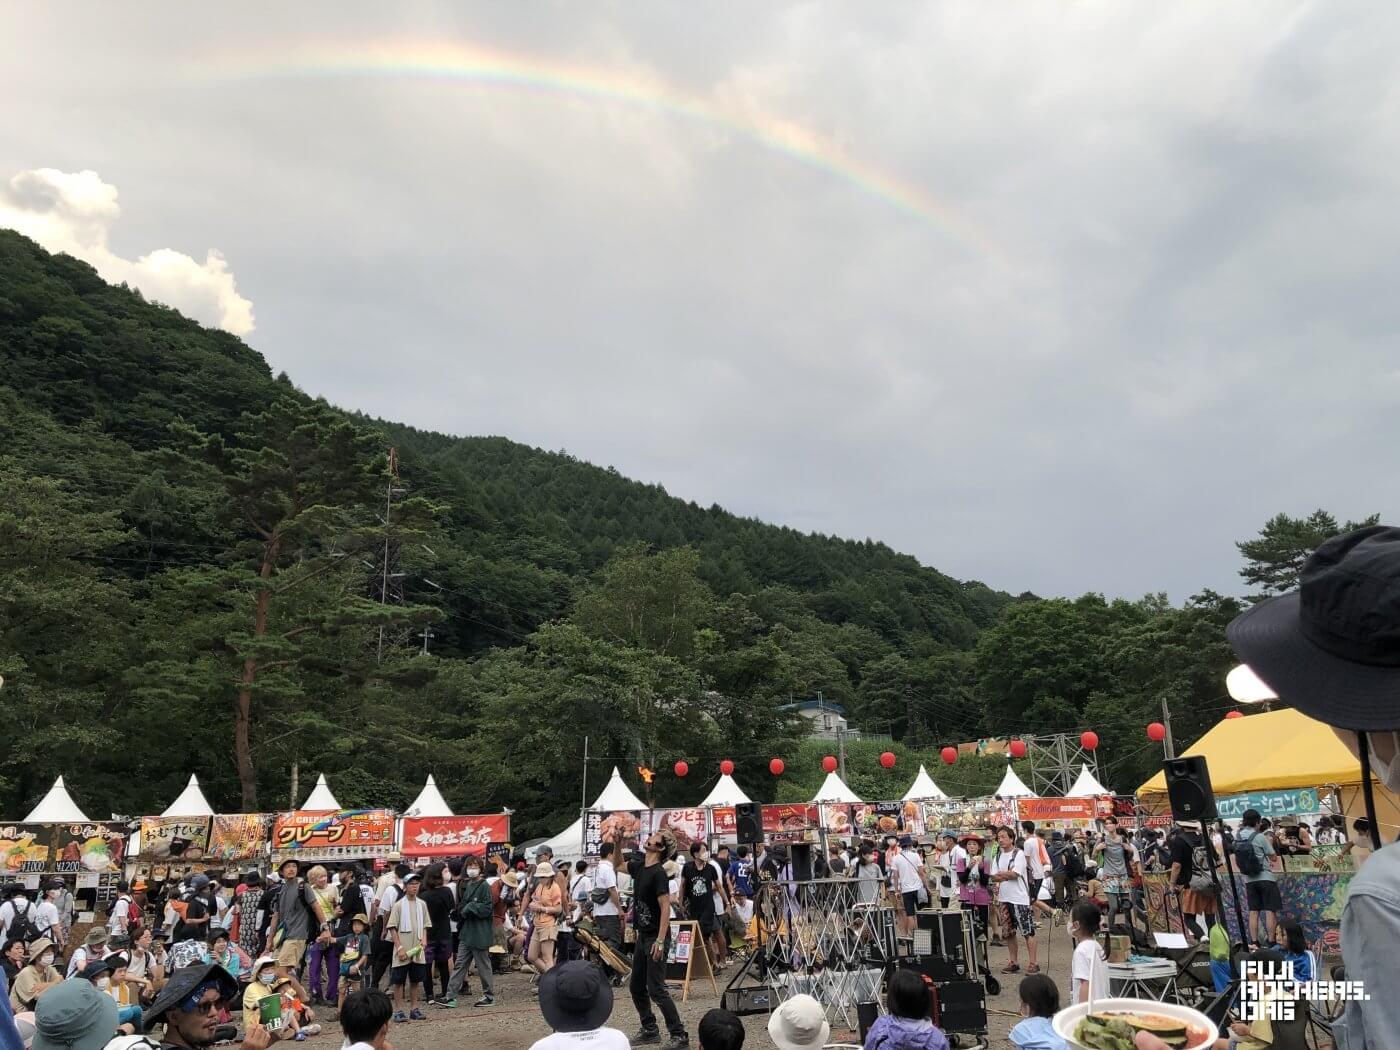 Rainbows over Fuji Rock